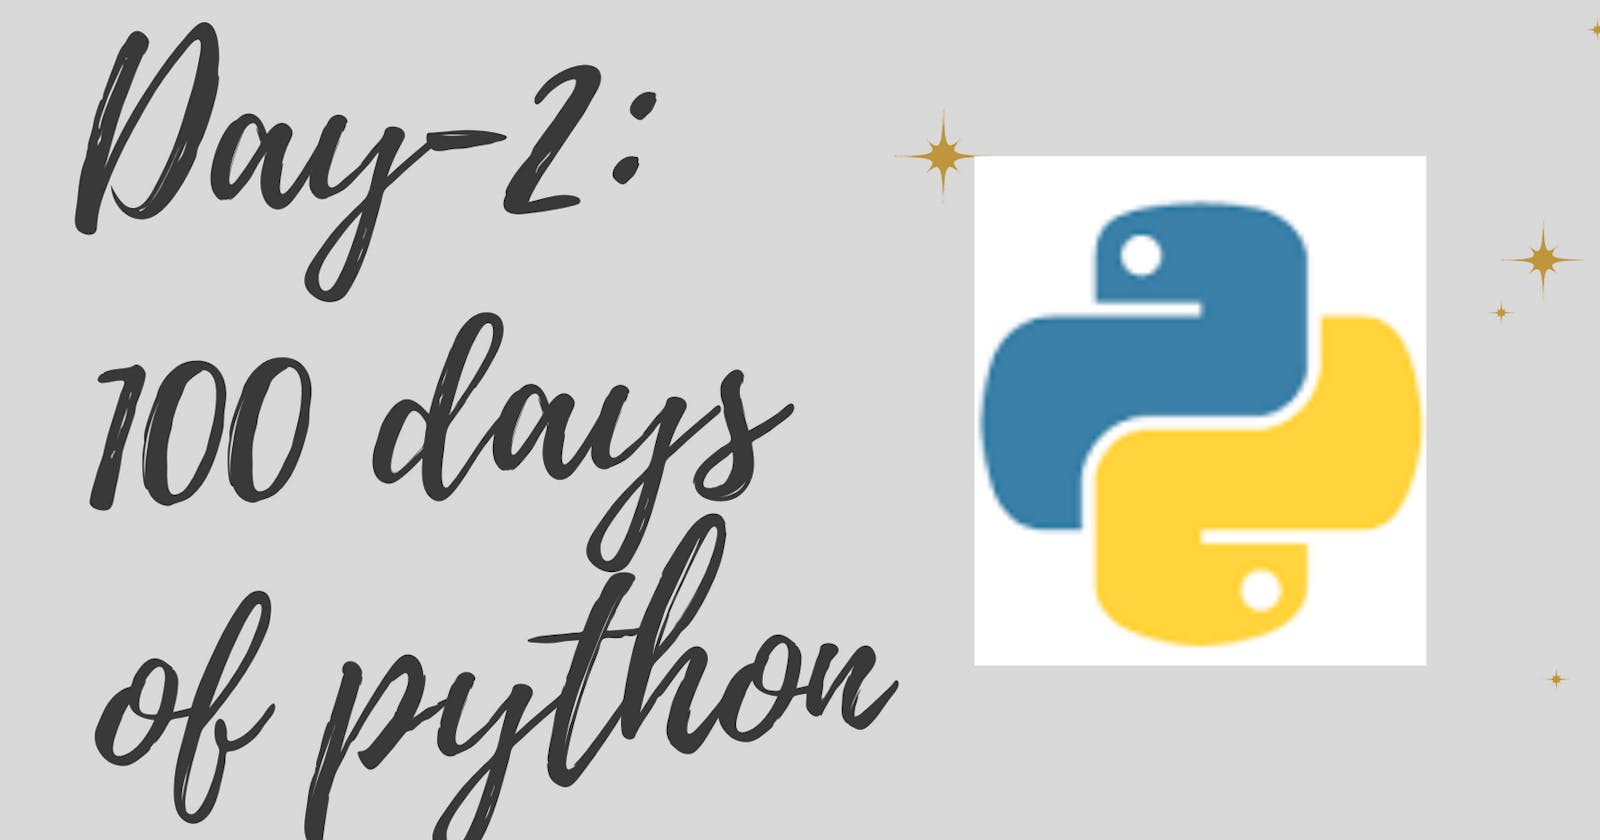 Day-2, 100 days of Python